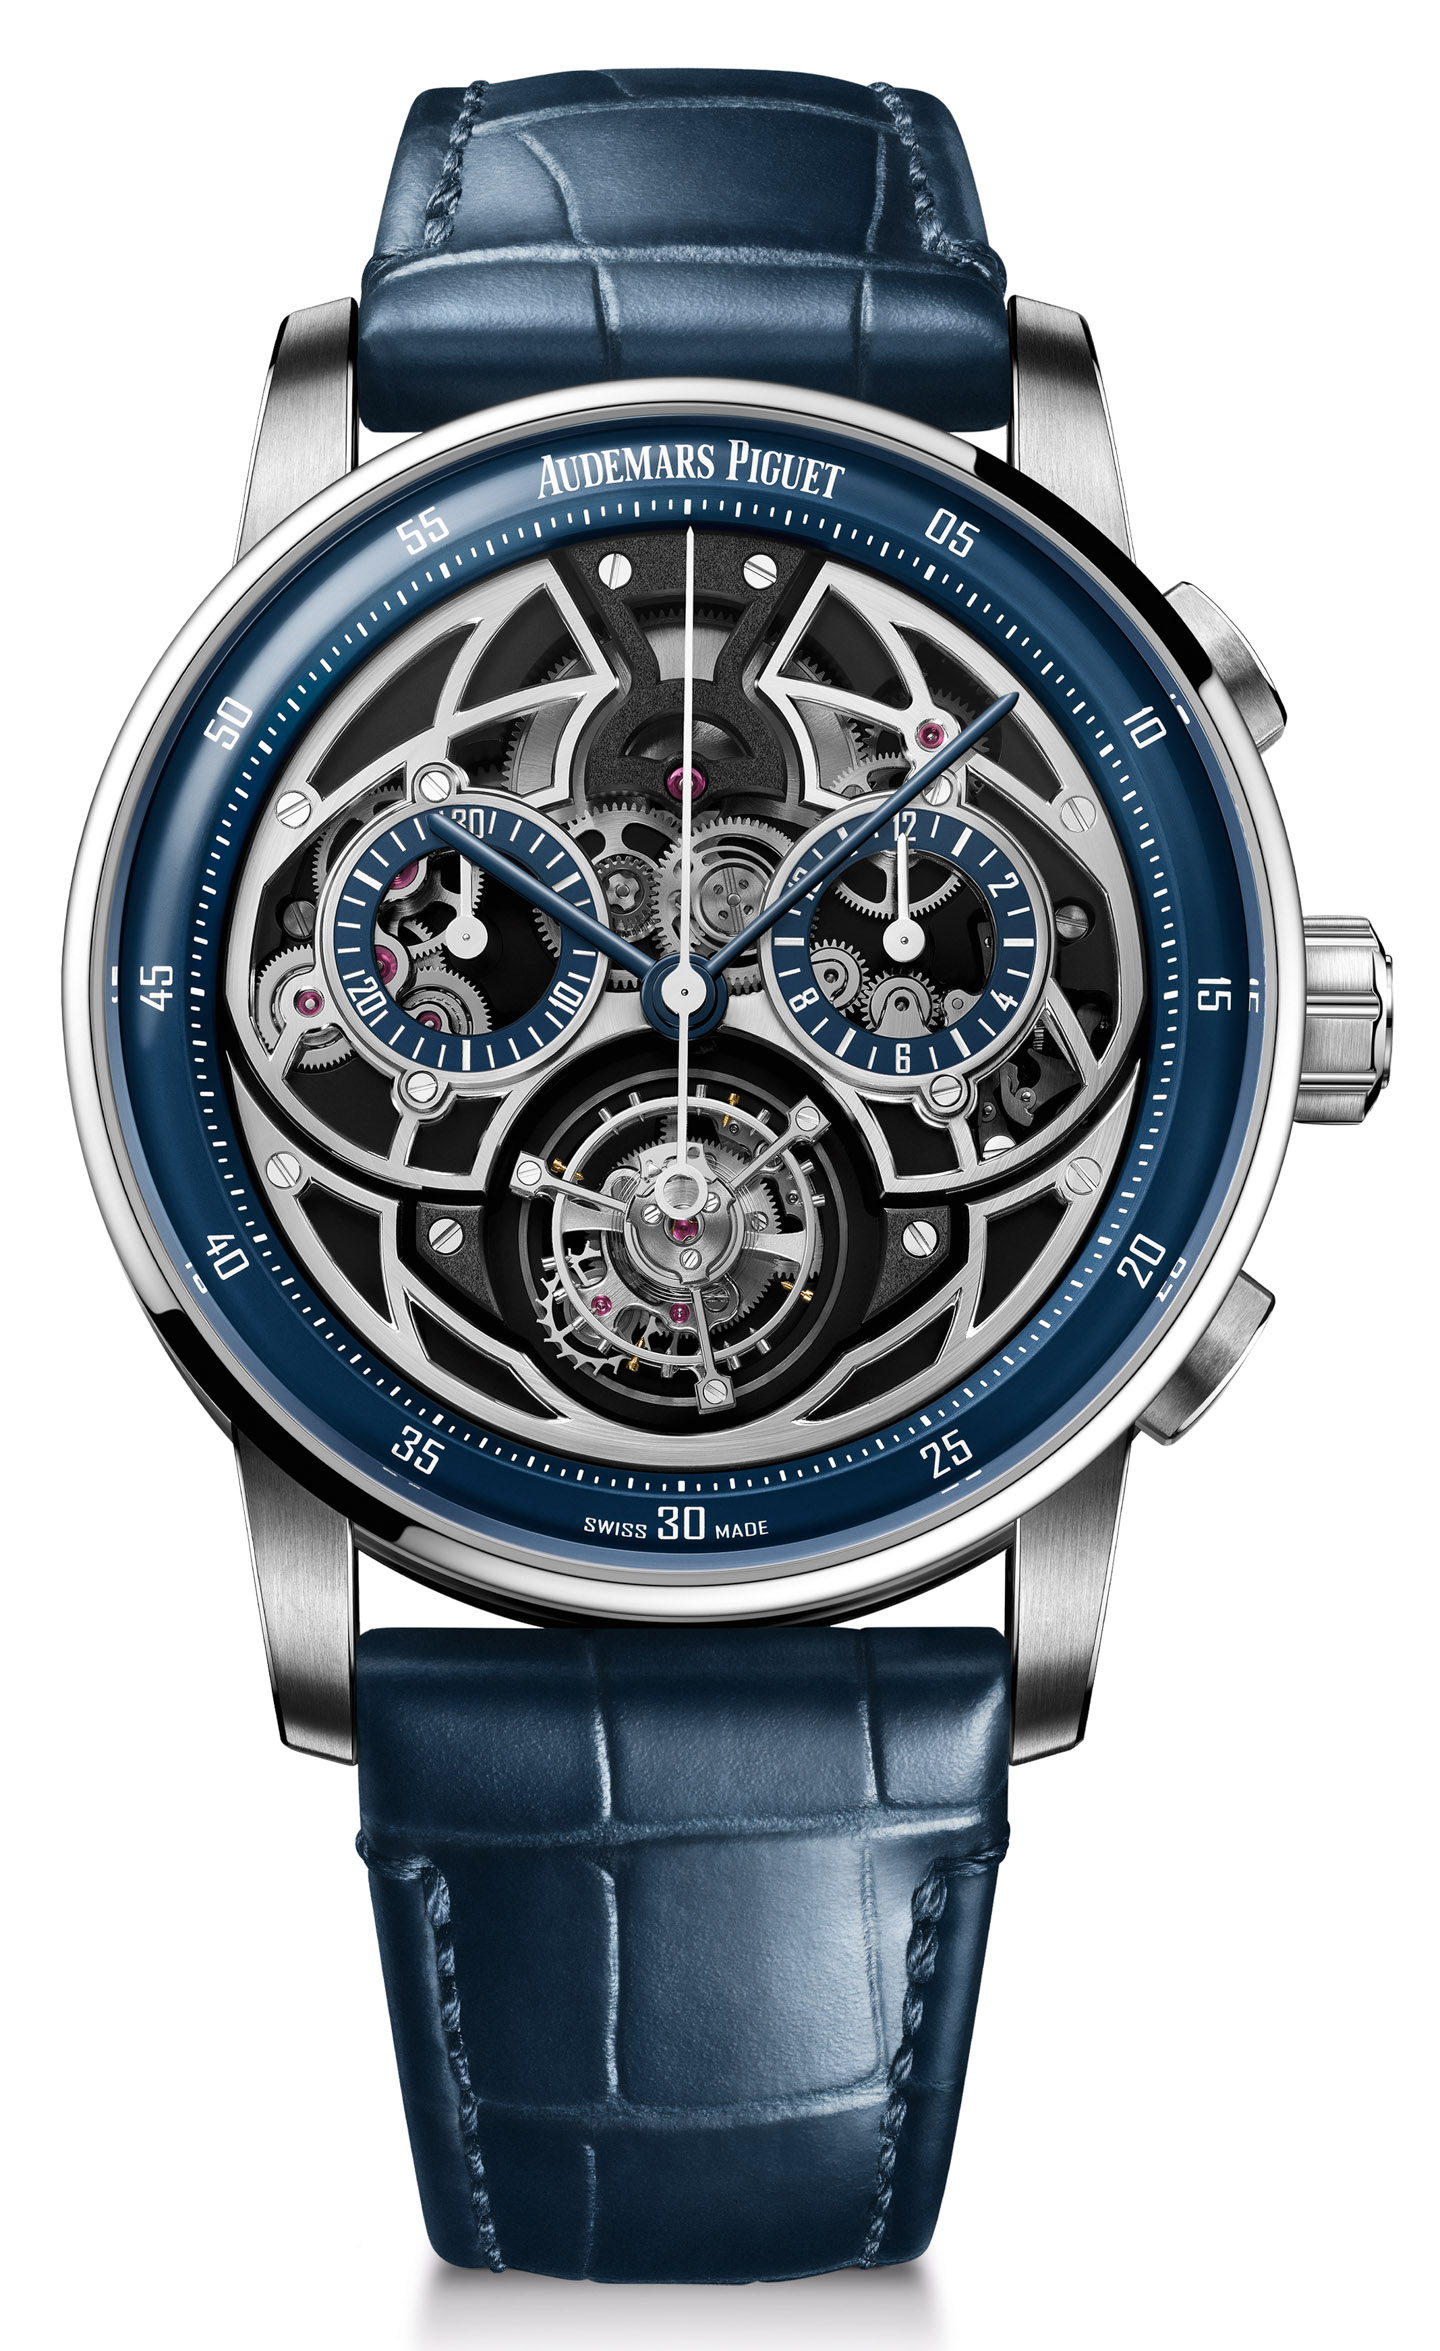 Audemars Piguet Code 11.59 Openworked Self-Winding Flying Tourbillon Chronograph fake Watch Watch Industry News 